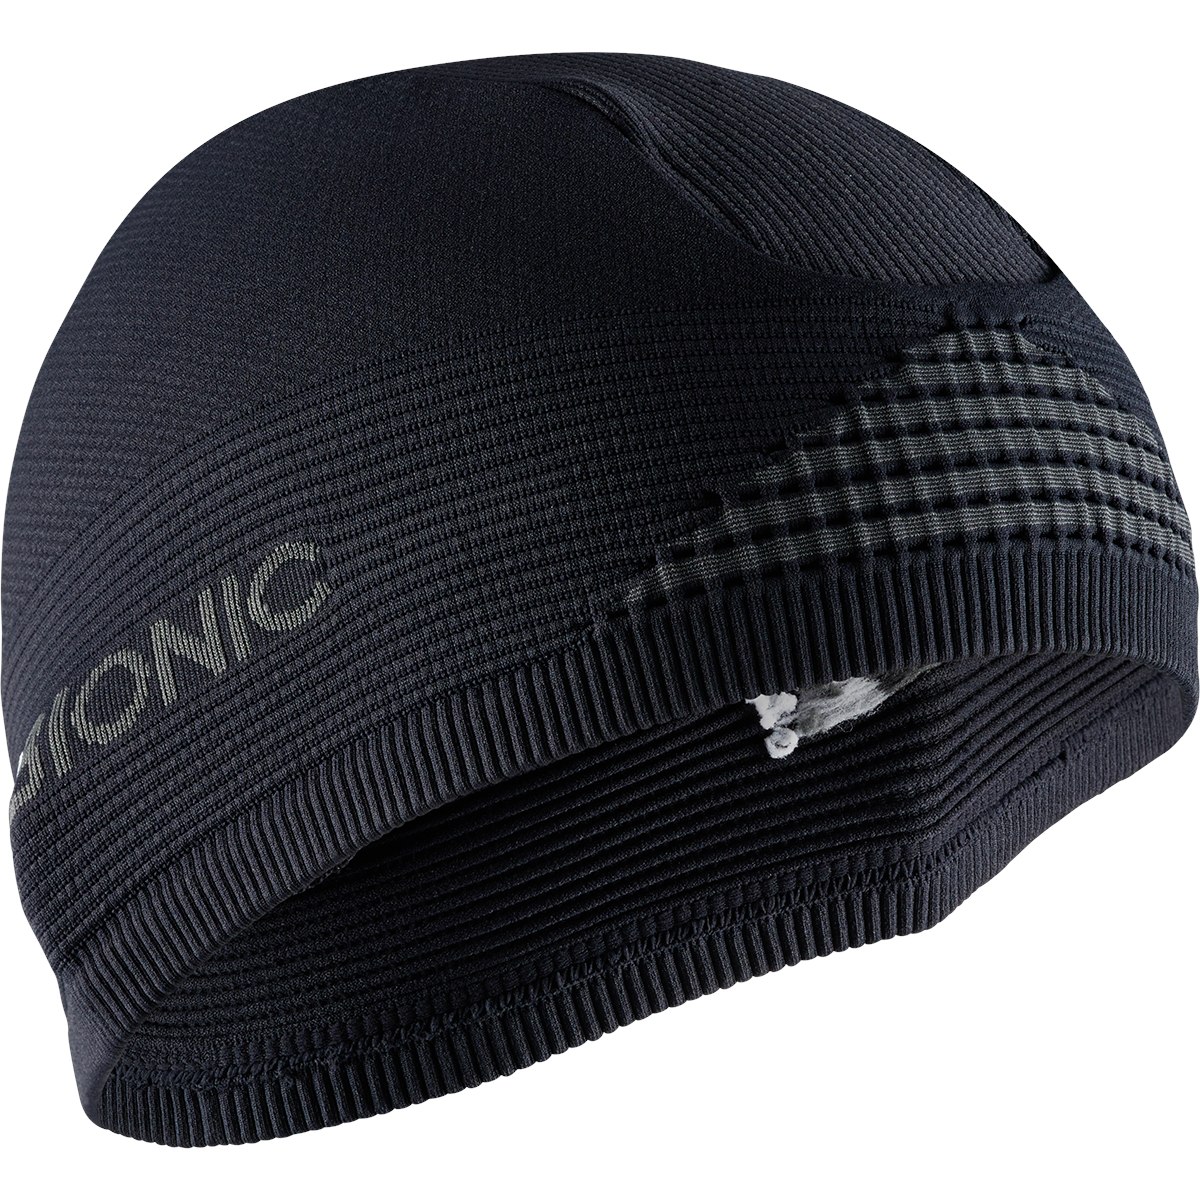 Produktbild von X-Bionic Helmet Cap Unterhelm - black/charcoal